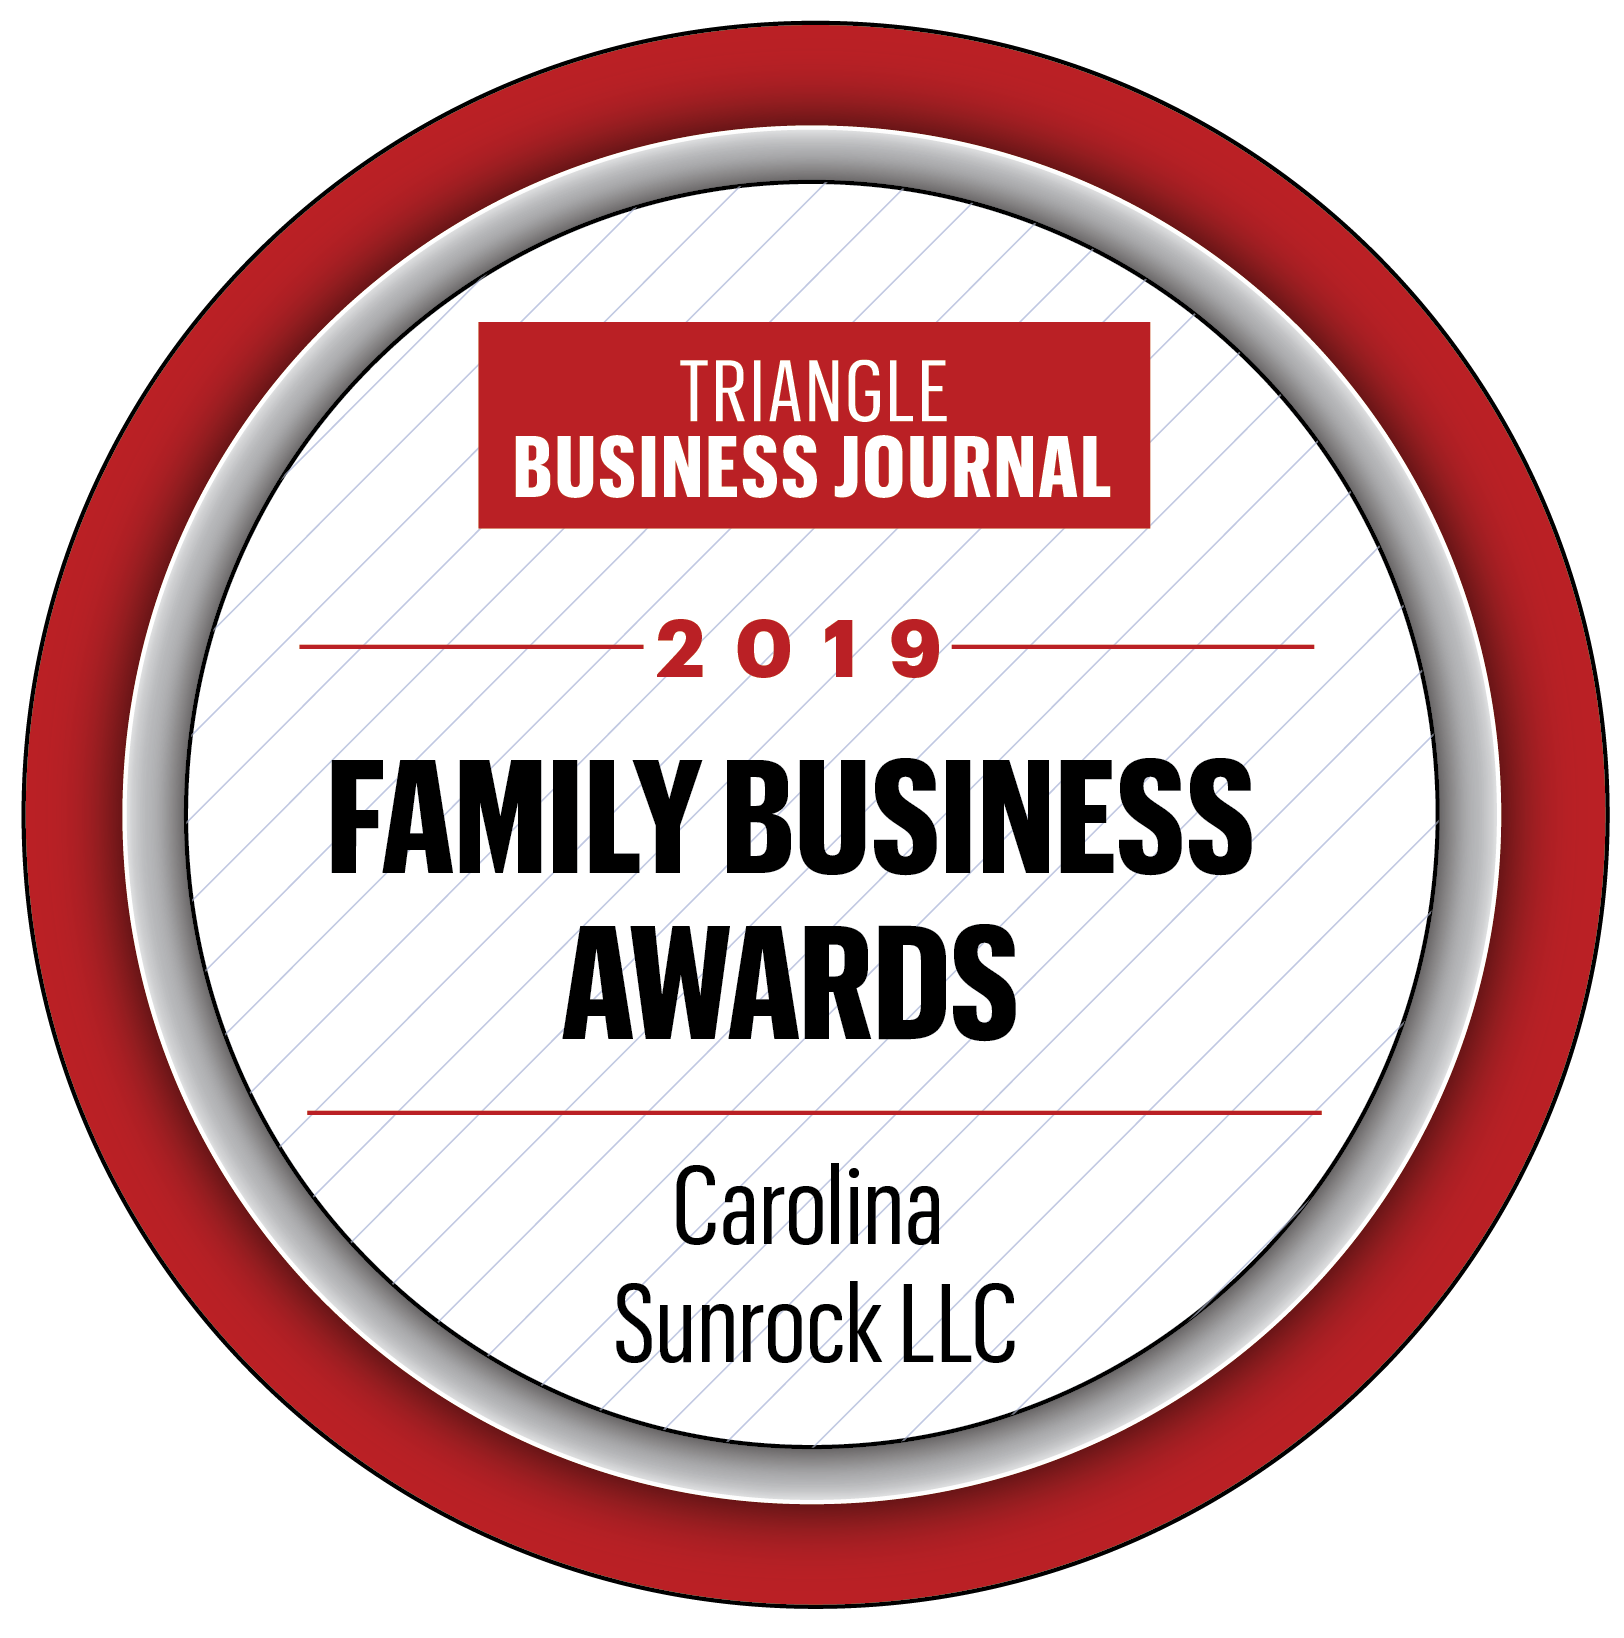 Triangle Business Journal 2019 Family Business Award for Sunrock LLC